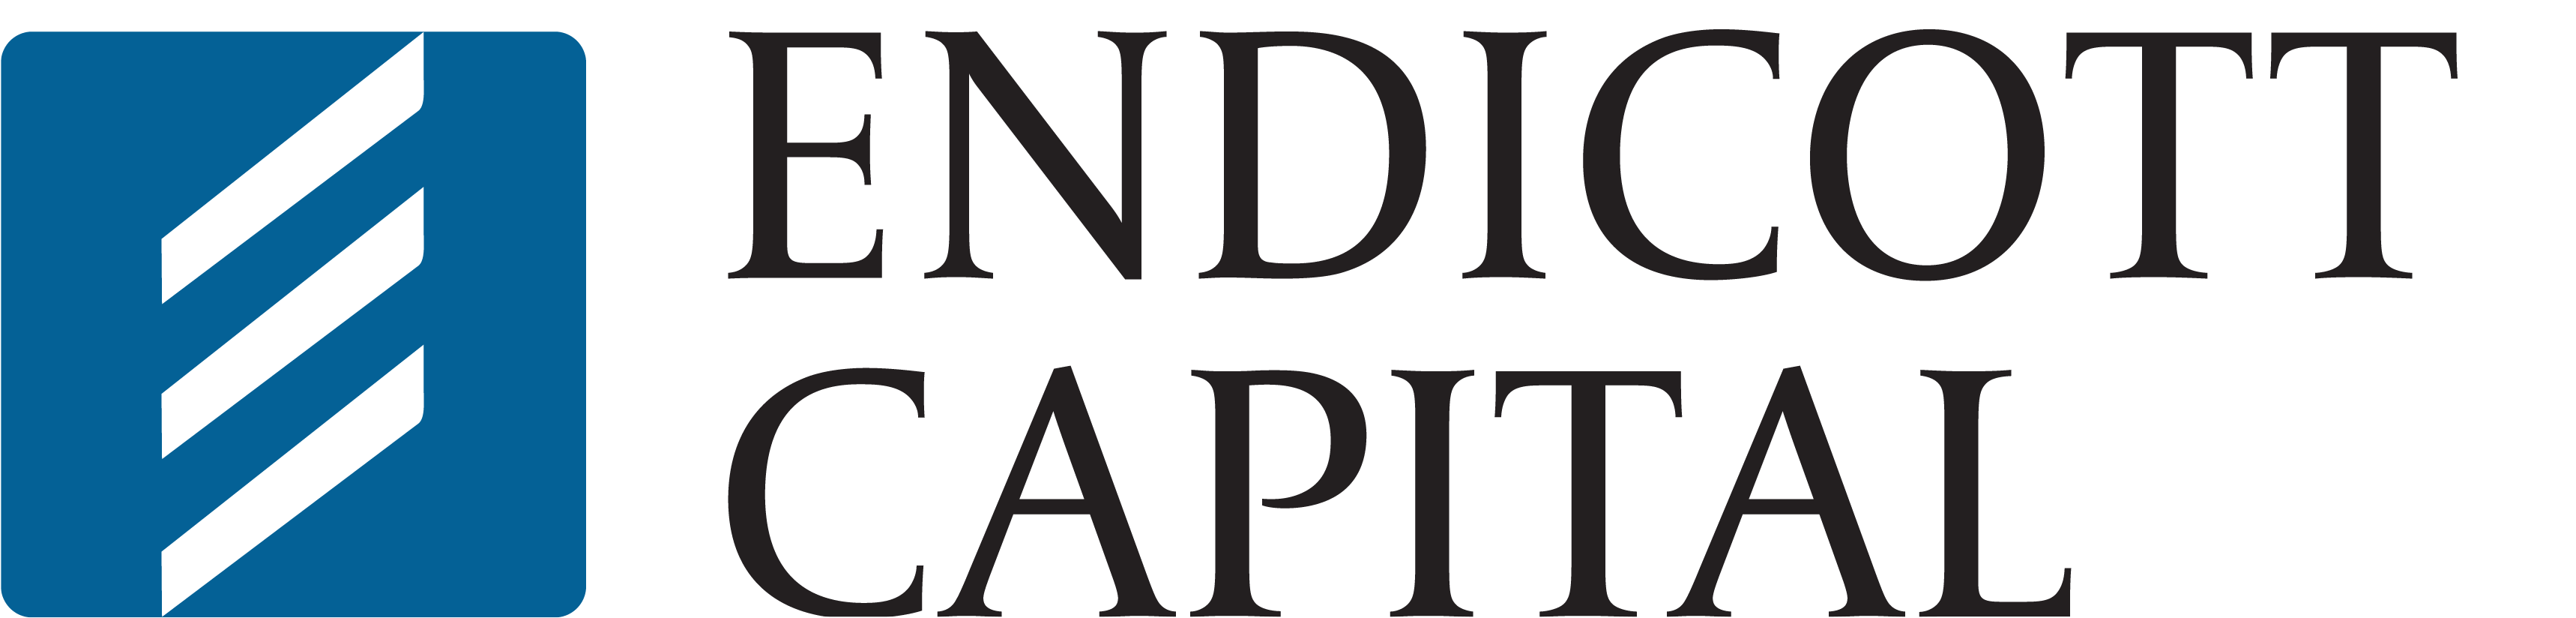 Endicott Capital Logo